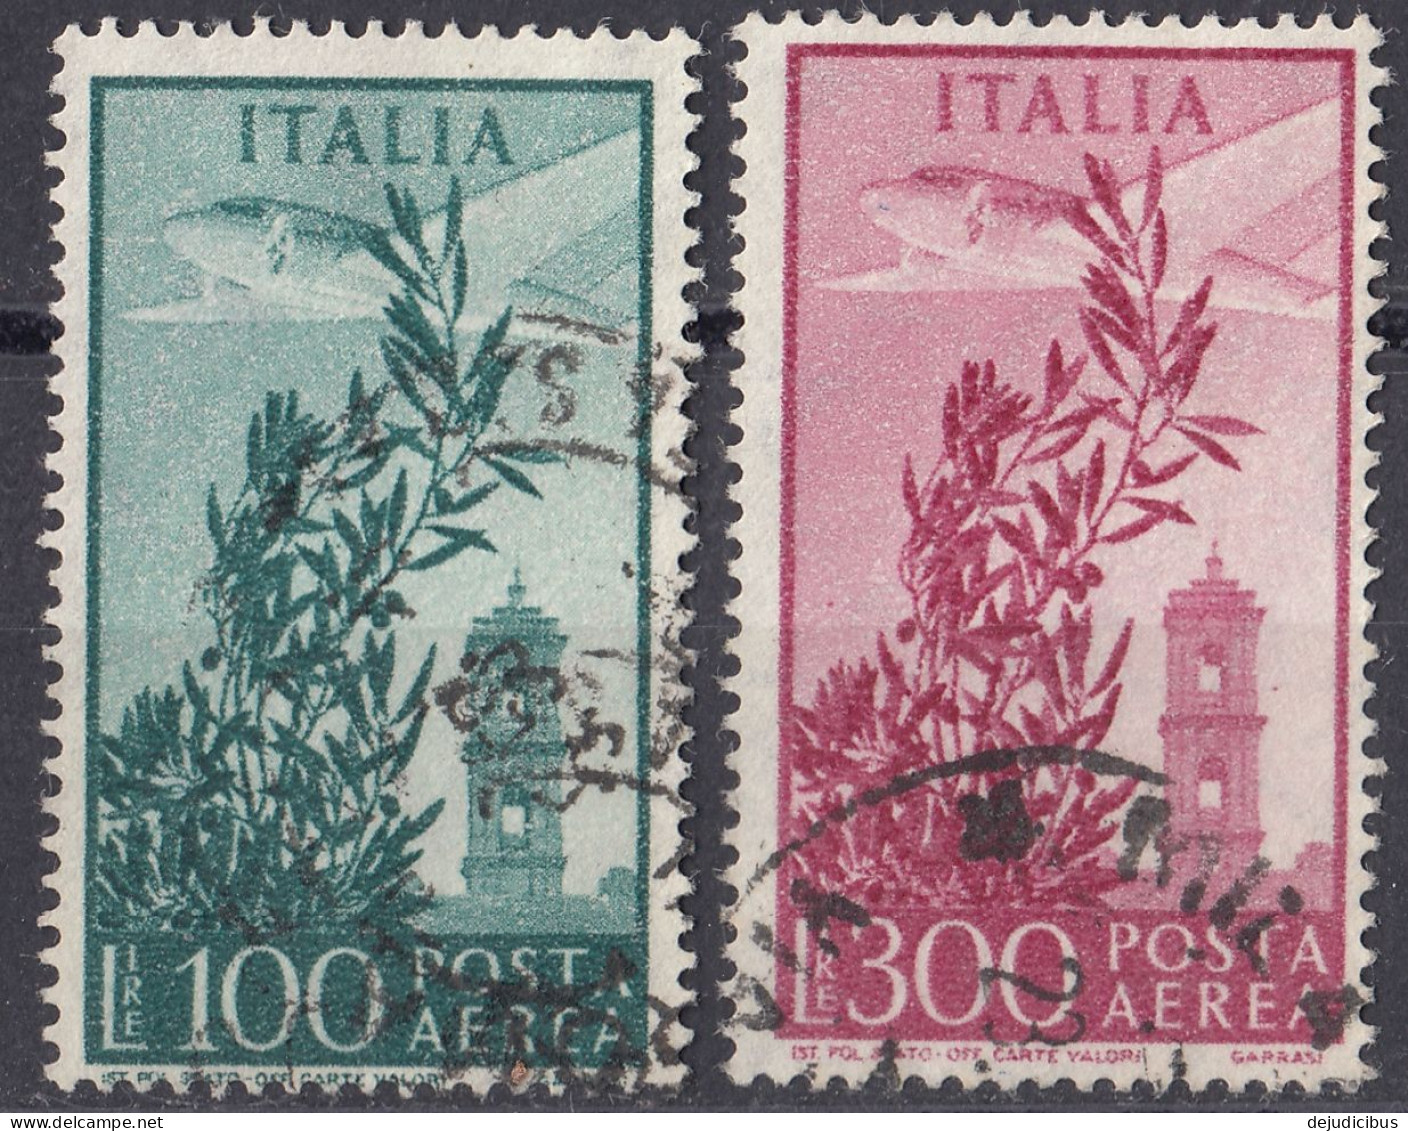 ITALIA - 1955/1959 - Serie Completa Usata Formata Da 2 Valori: Yvert Posta Aerea 136/137. - Posta Aerea